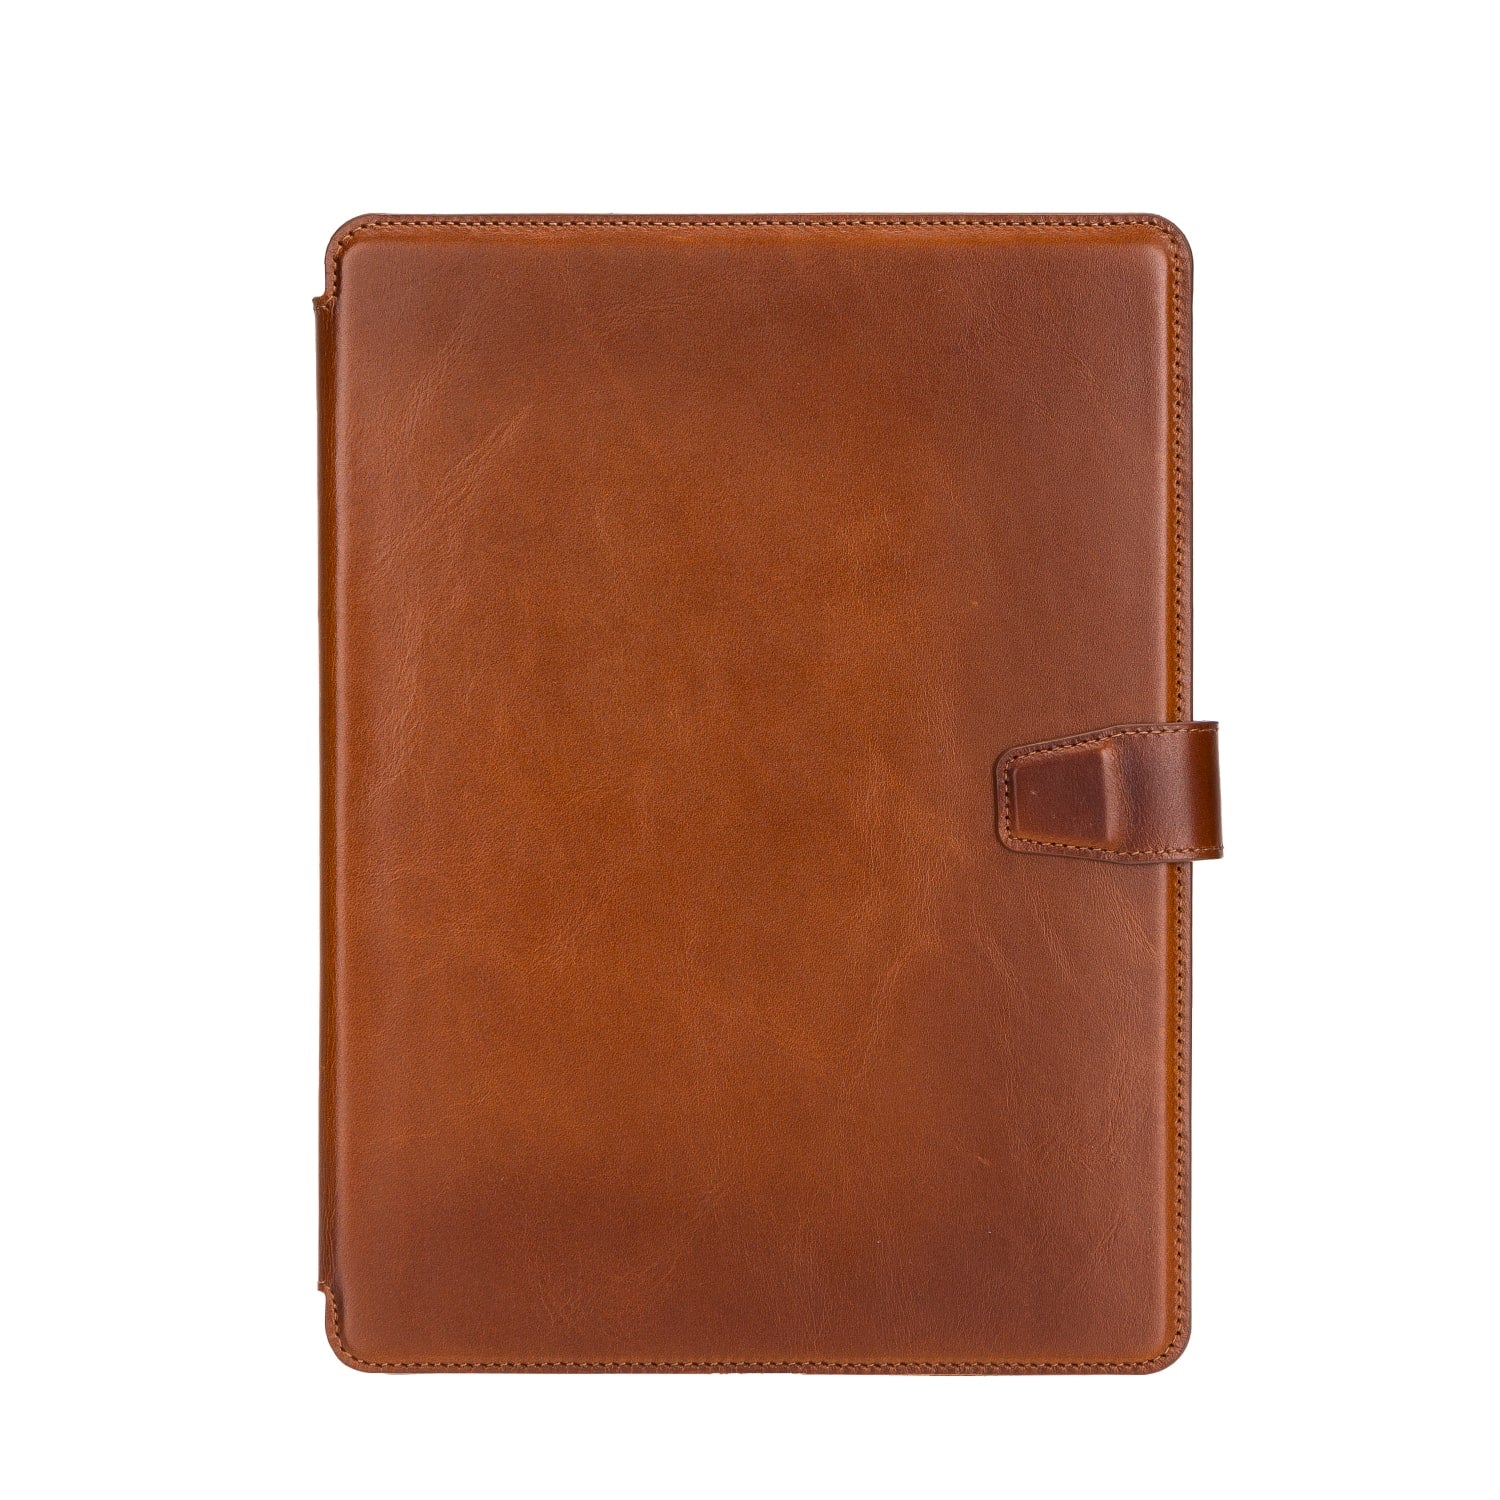 Brown Leather iPad 10.2 Inc Smart Folio Case with Apple Pen Holder - Bomonti - 3